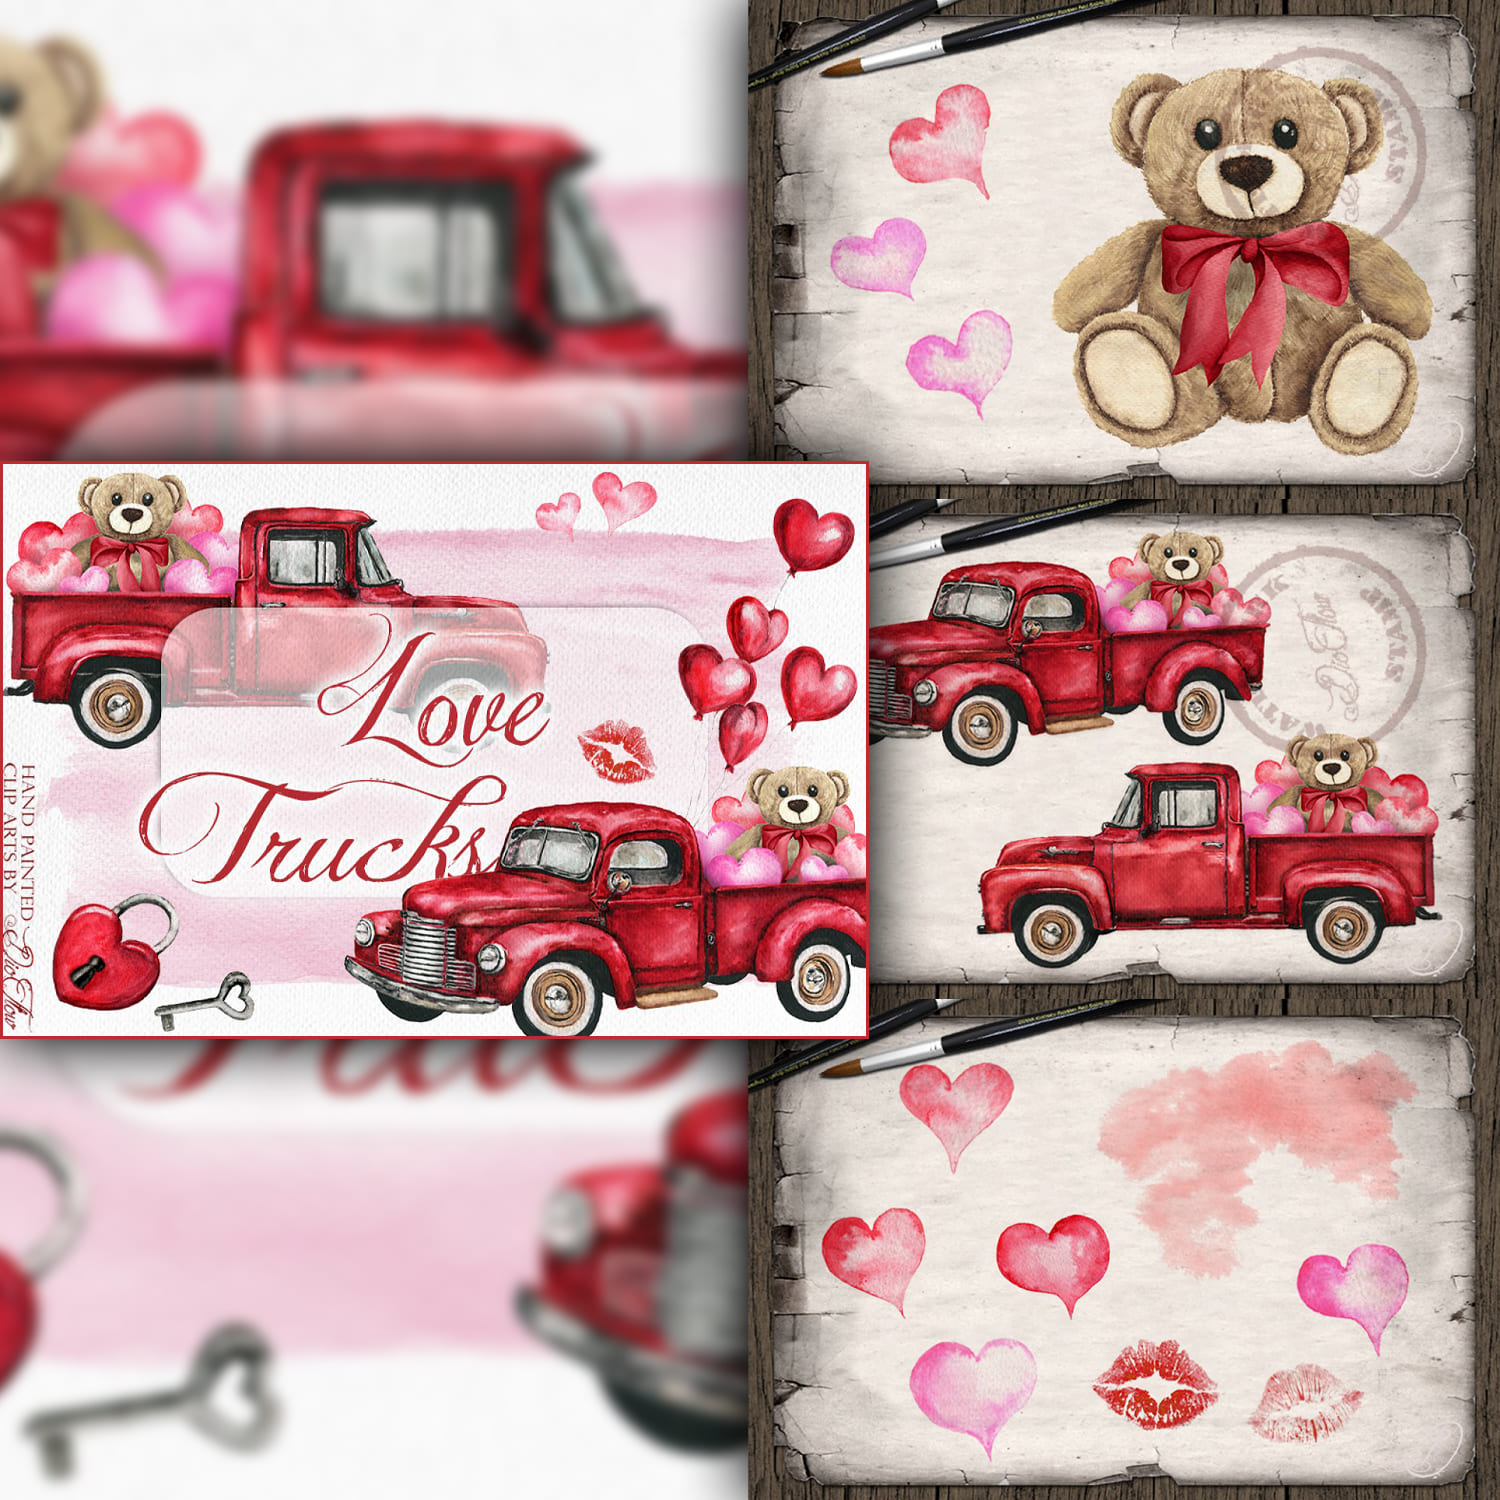 Love Truck Watercolor Illustration cover.